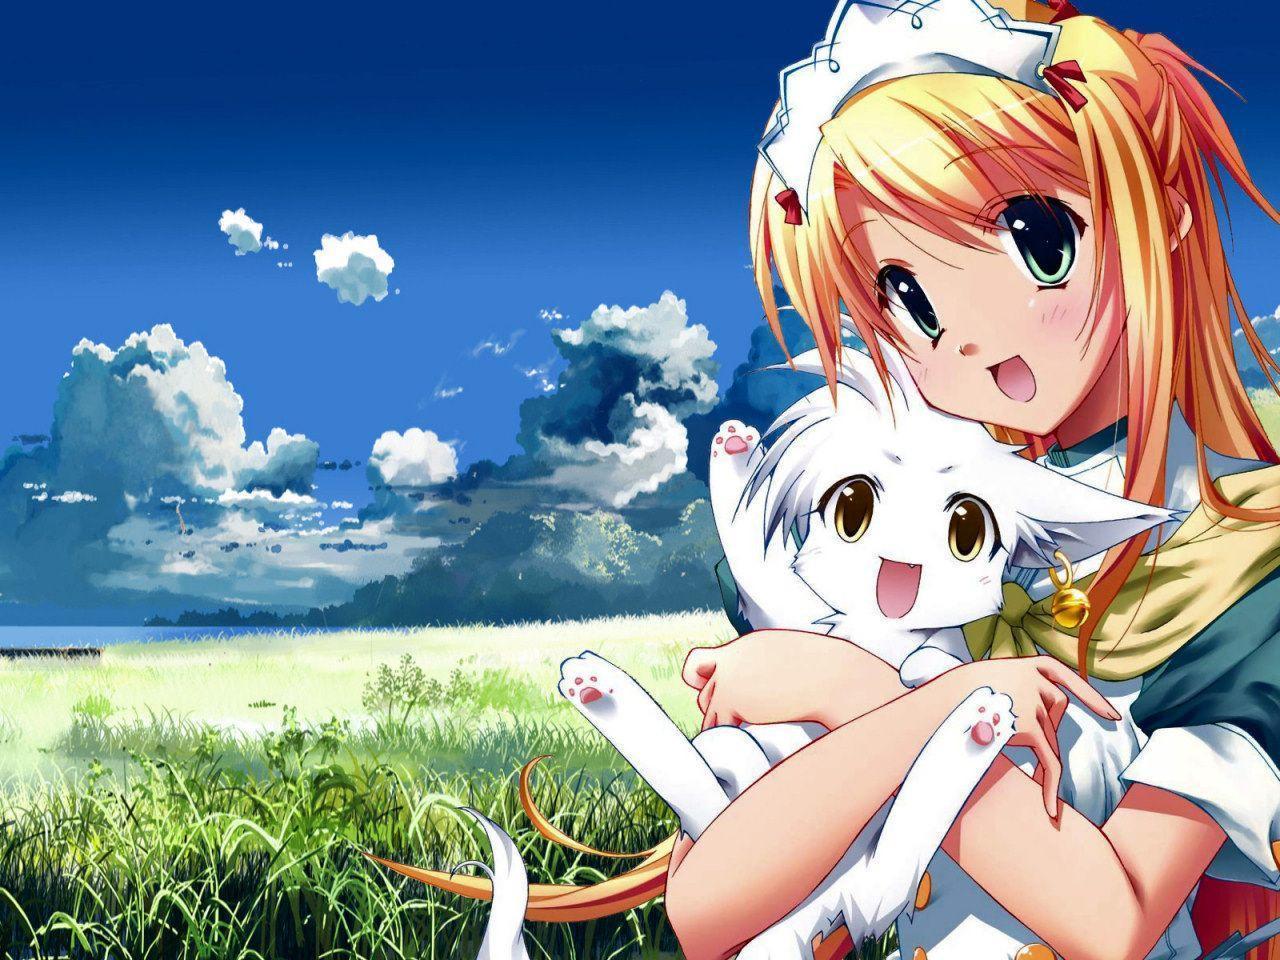 anime cat girl - (Pics) 2. More Anime